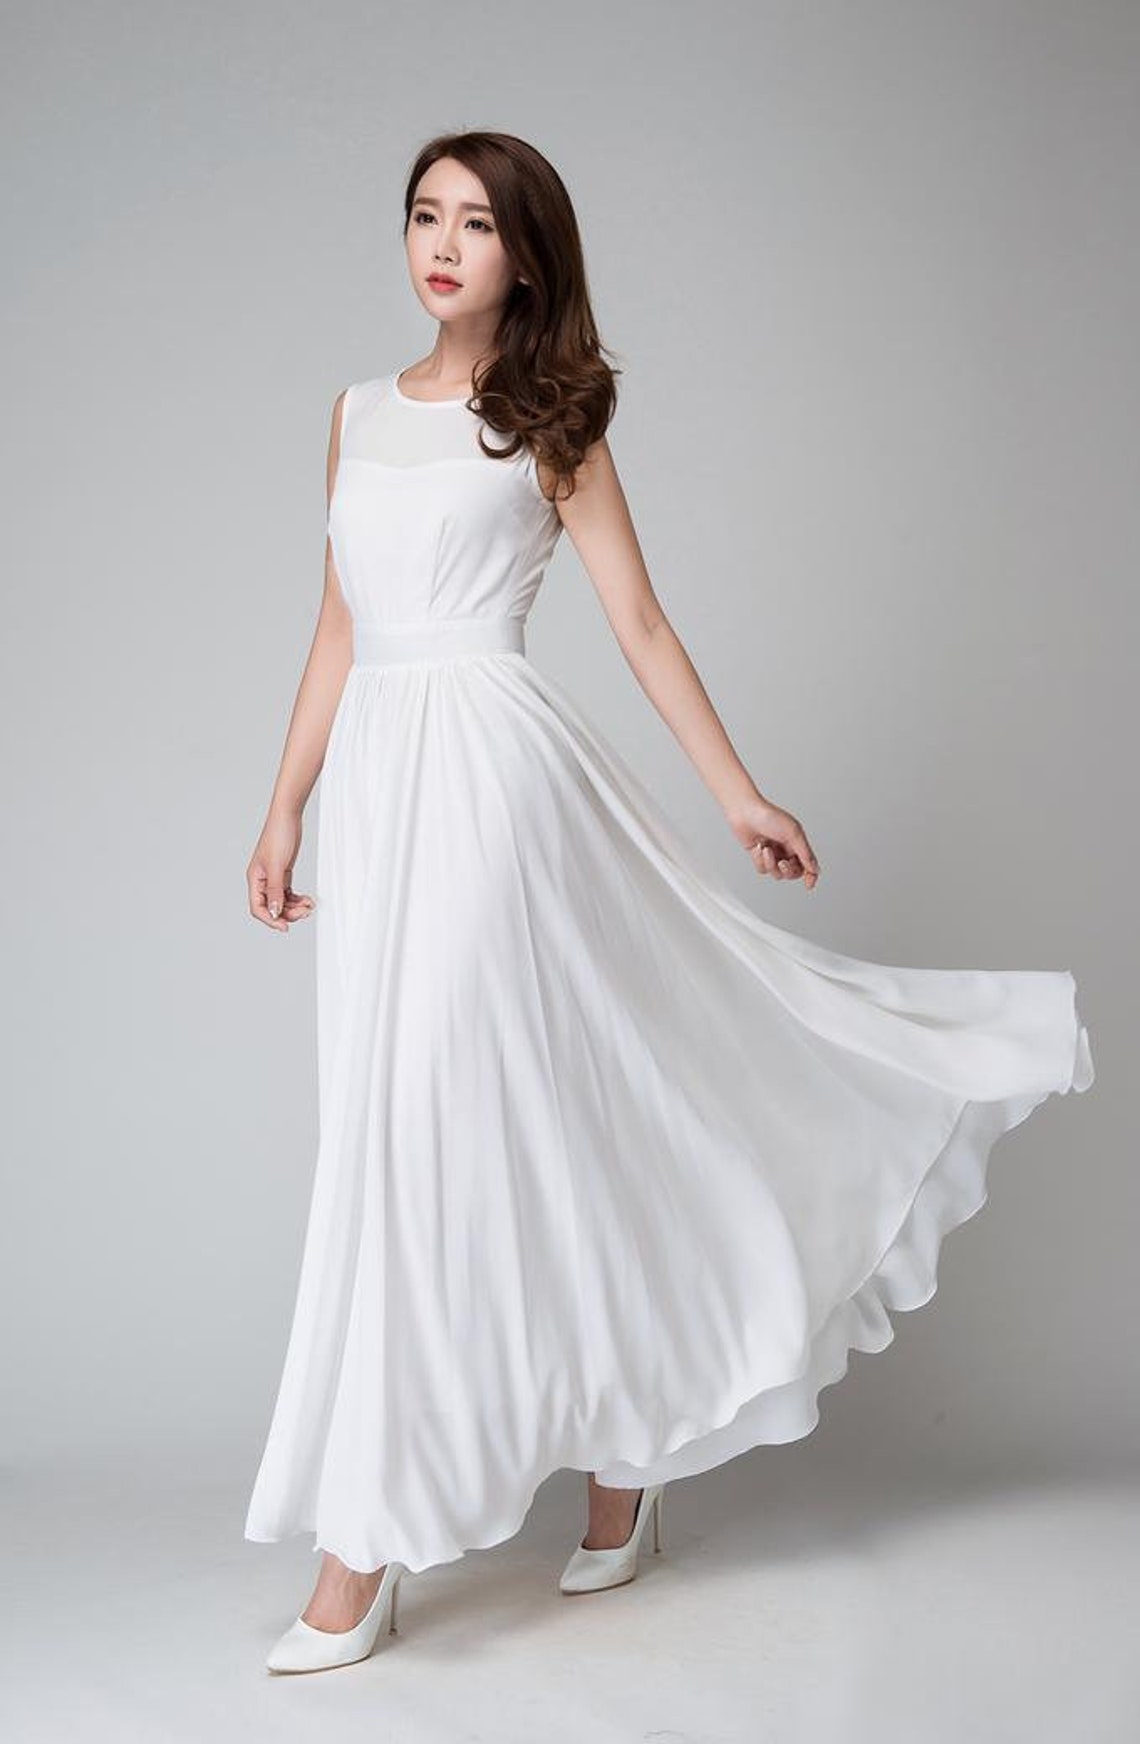 Modest wedding dress Simple wedding dress White Maxi dress | Etsy